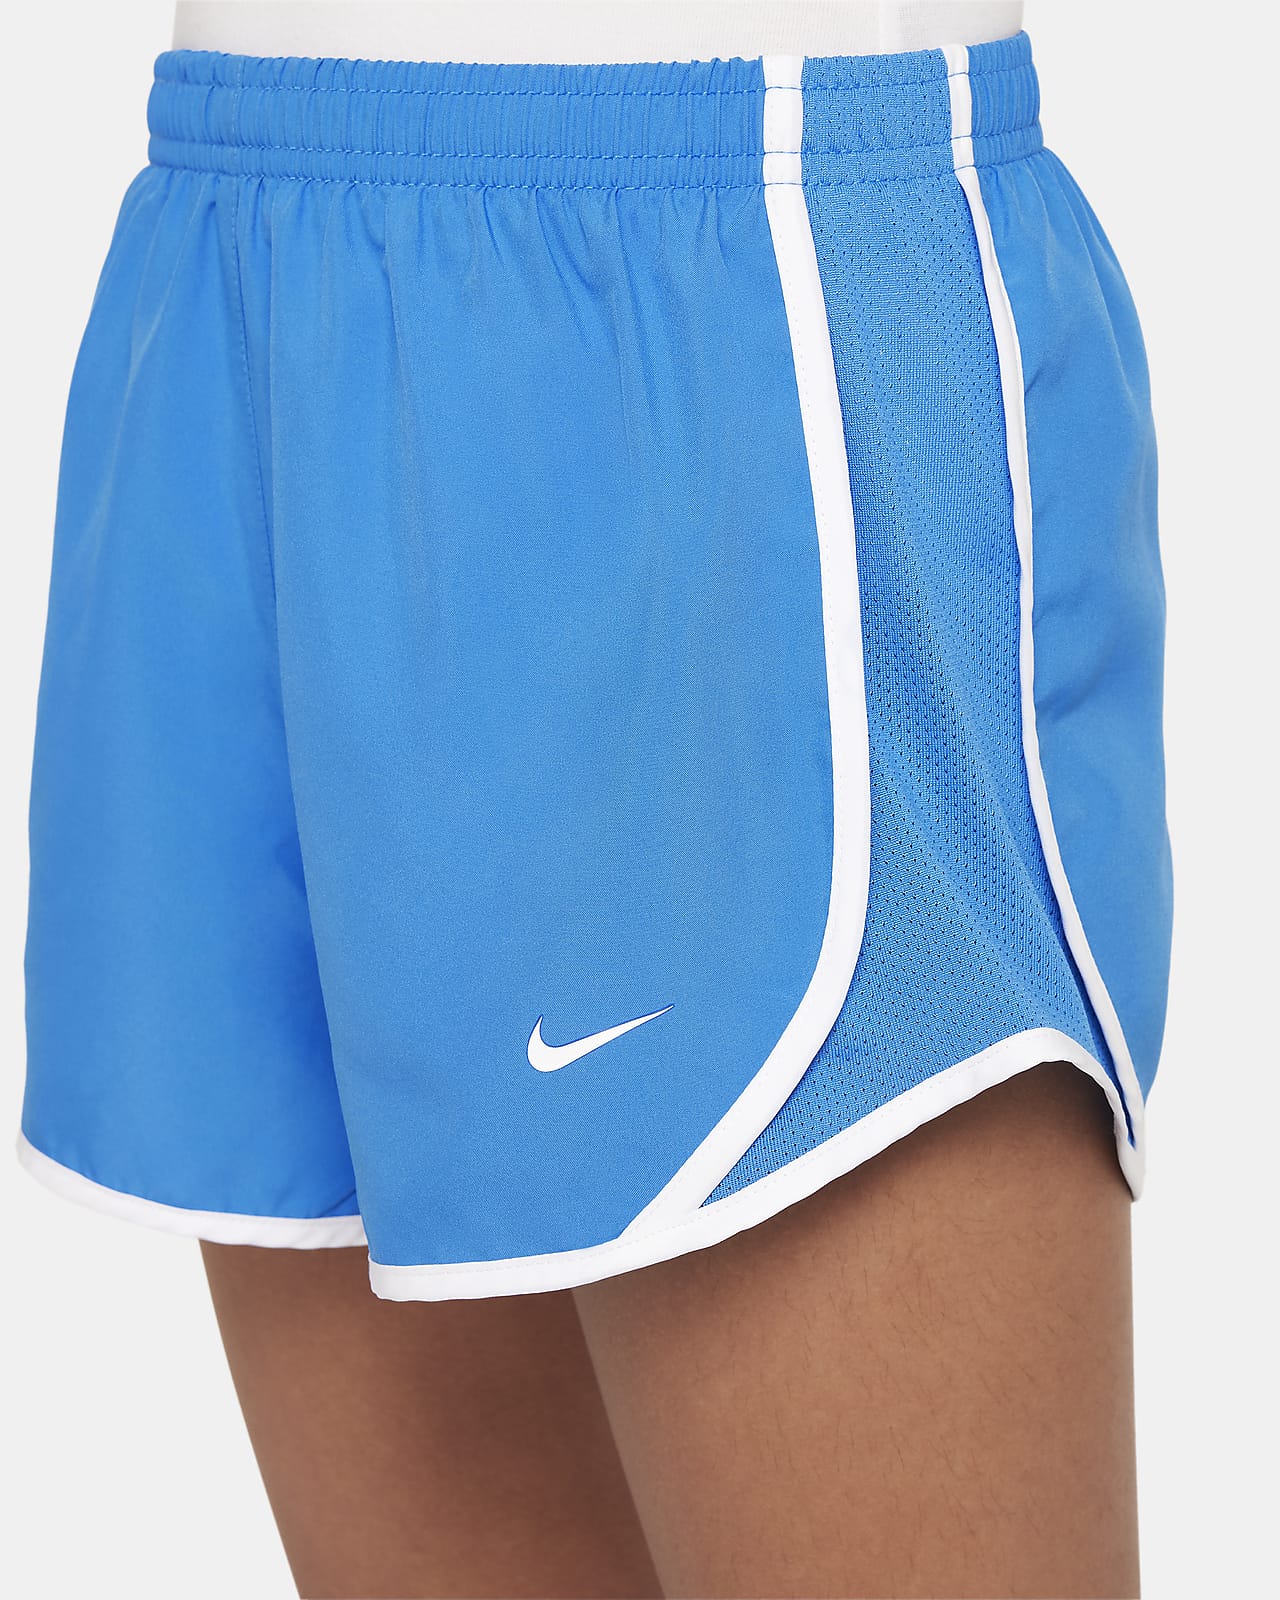 Nike Dri-Fit Girls Athletic Running Shorts Black w/ White Trim